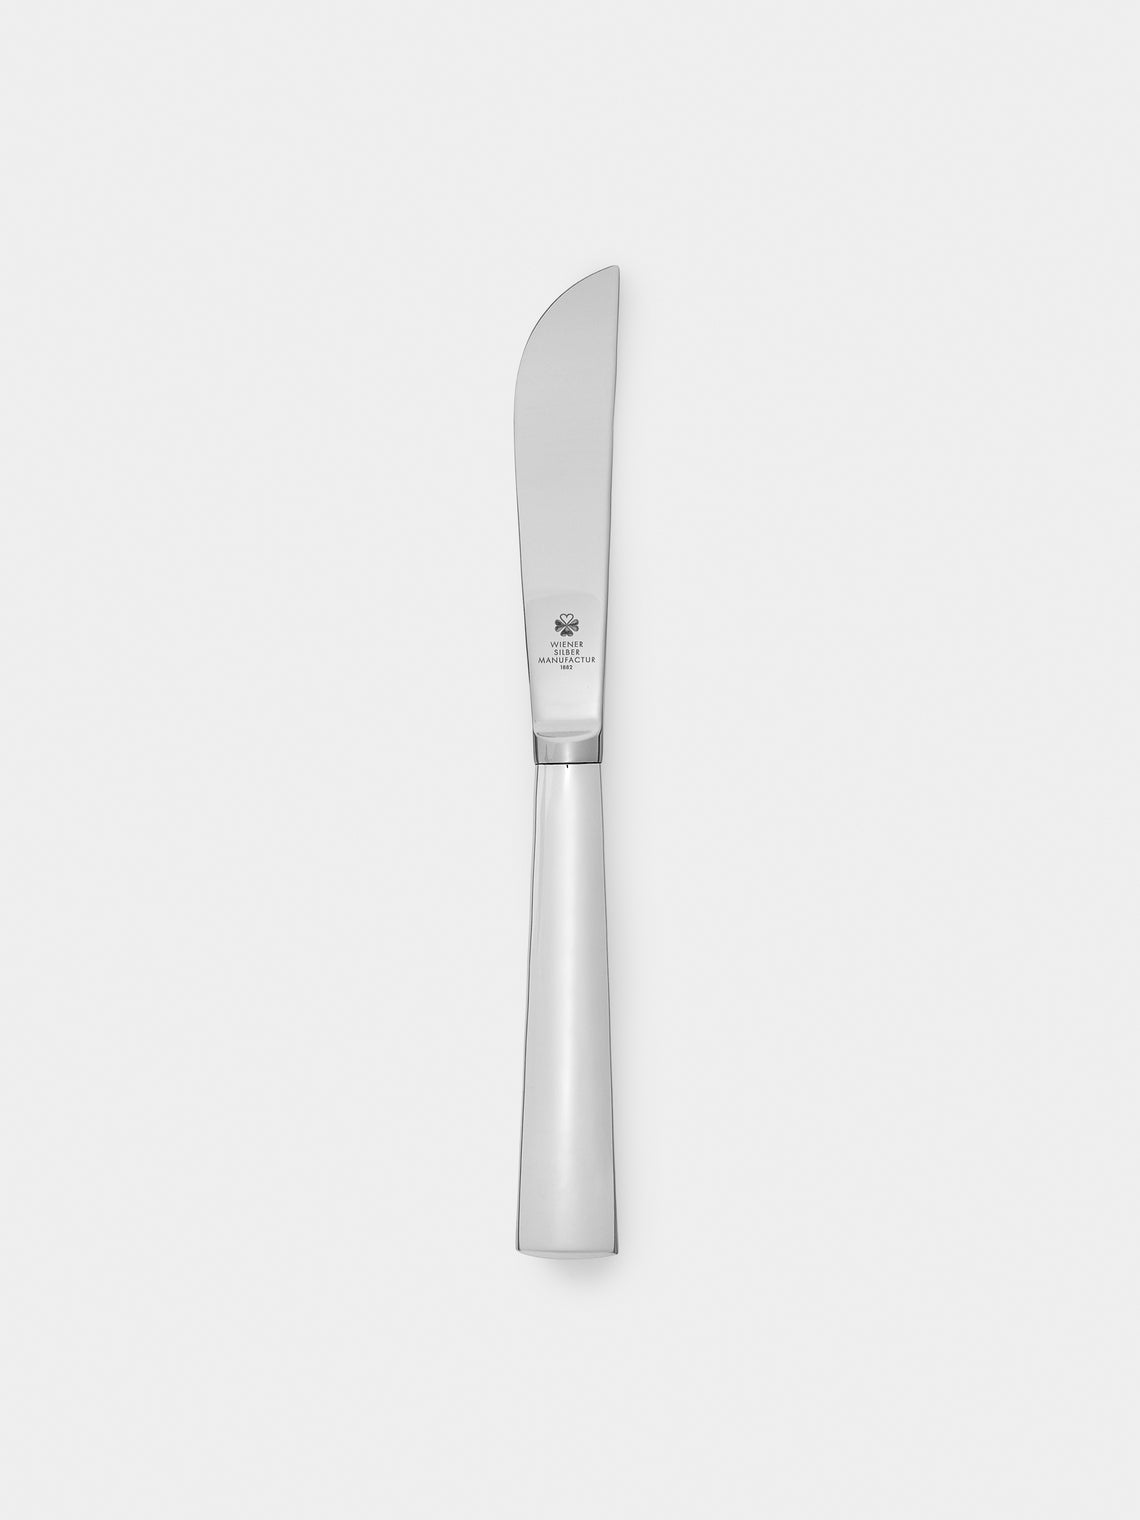 Wiener Silber Manufactur - Josef Hoffmann 135 Silver-Plated Fruit Knife - Silver - ABASK - 